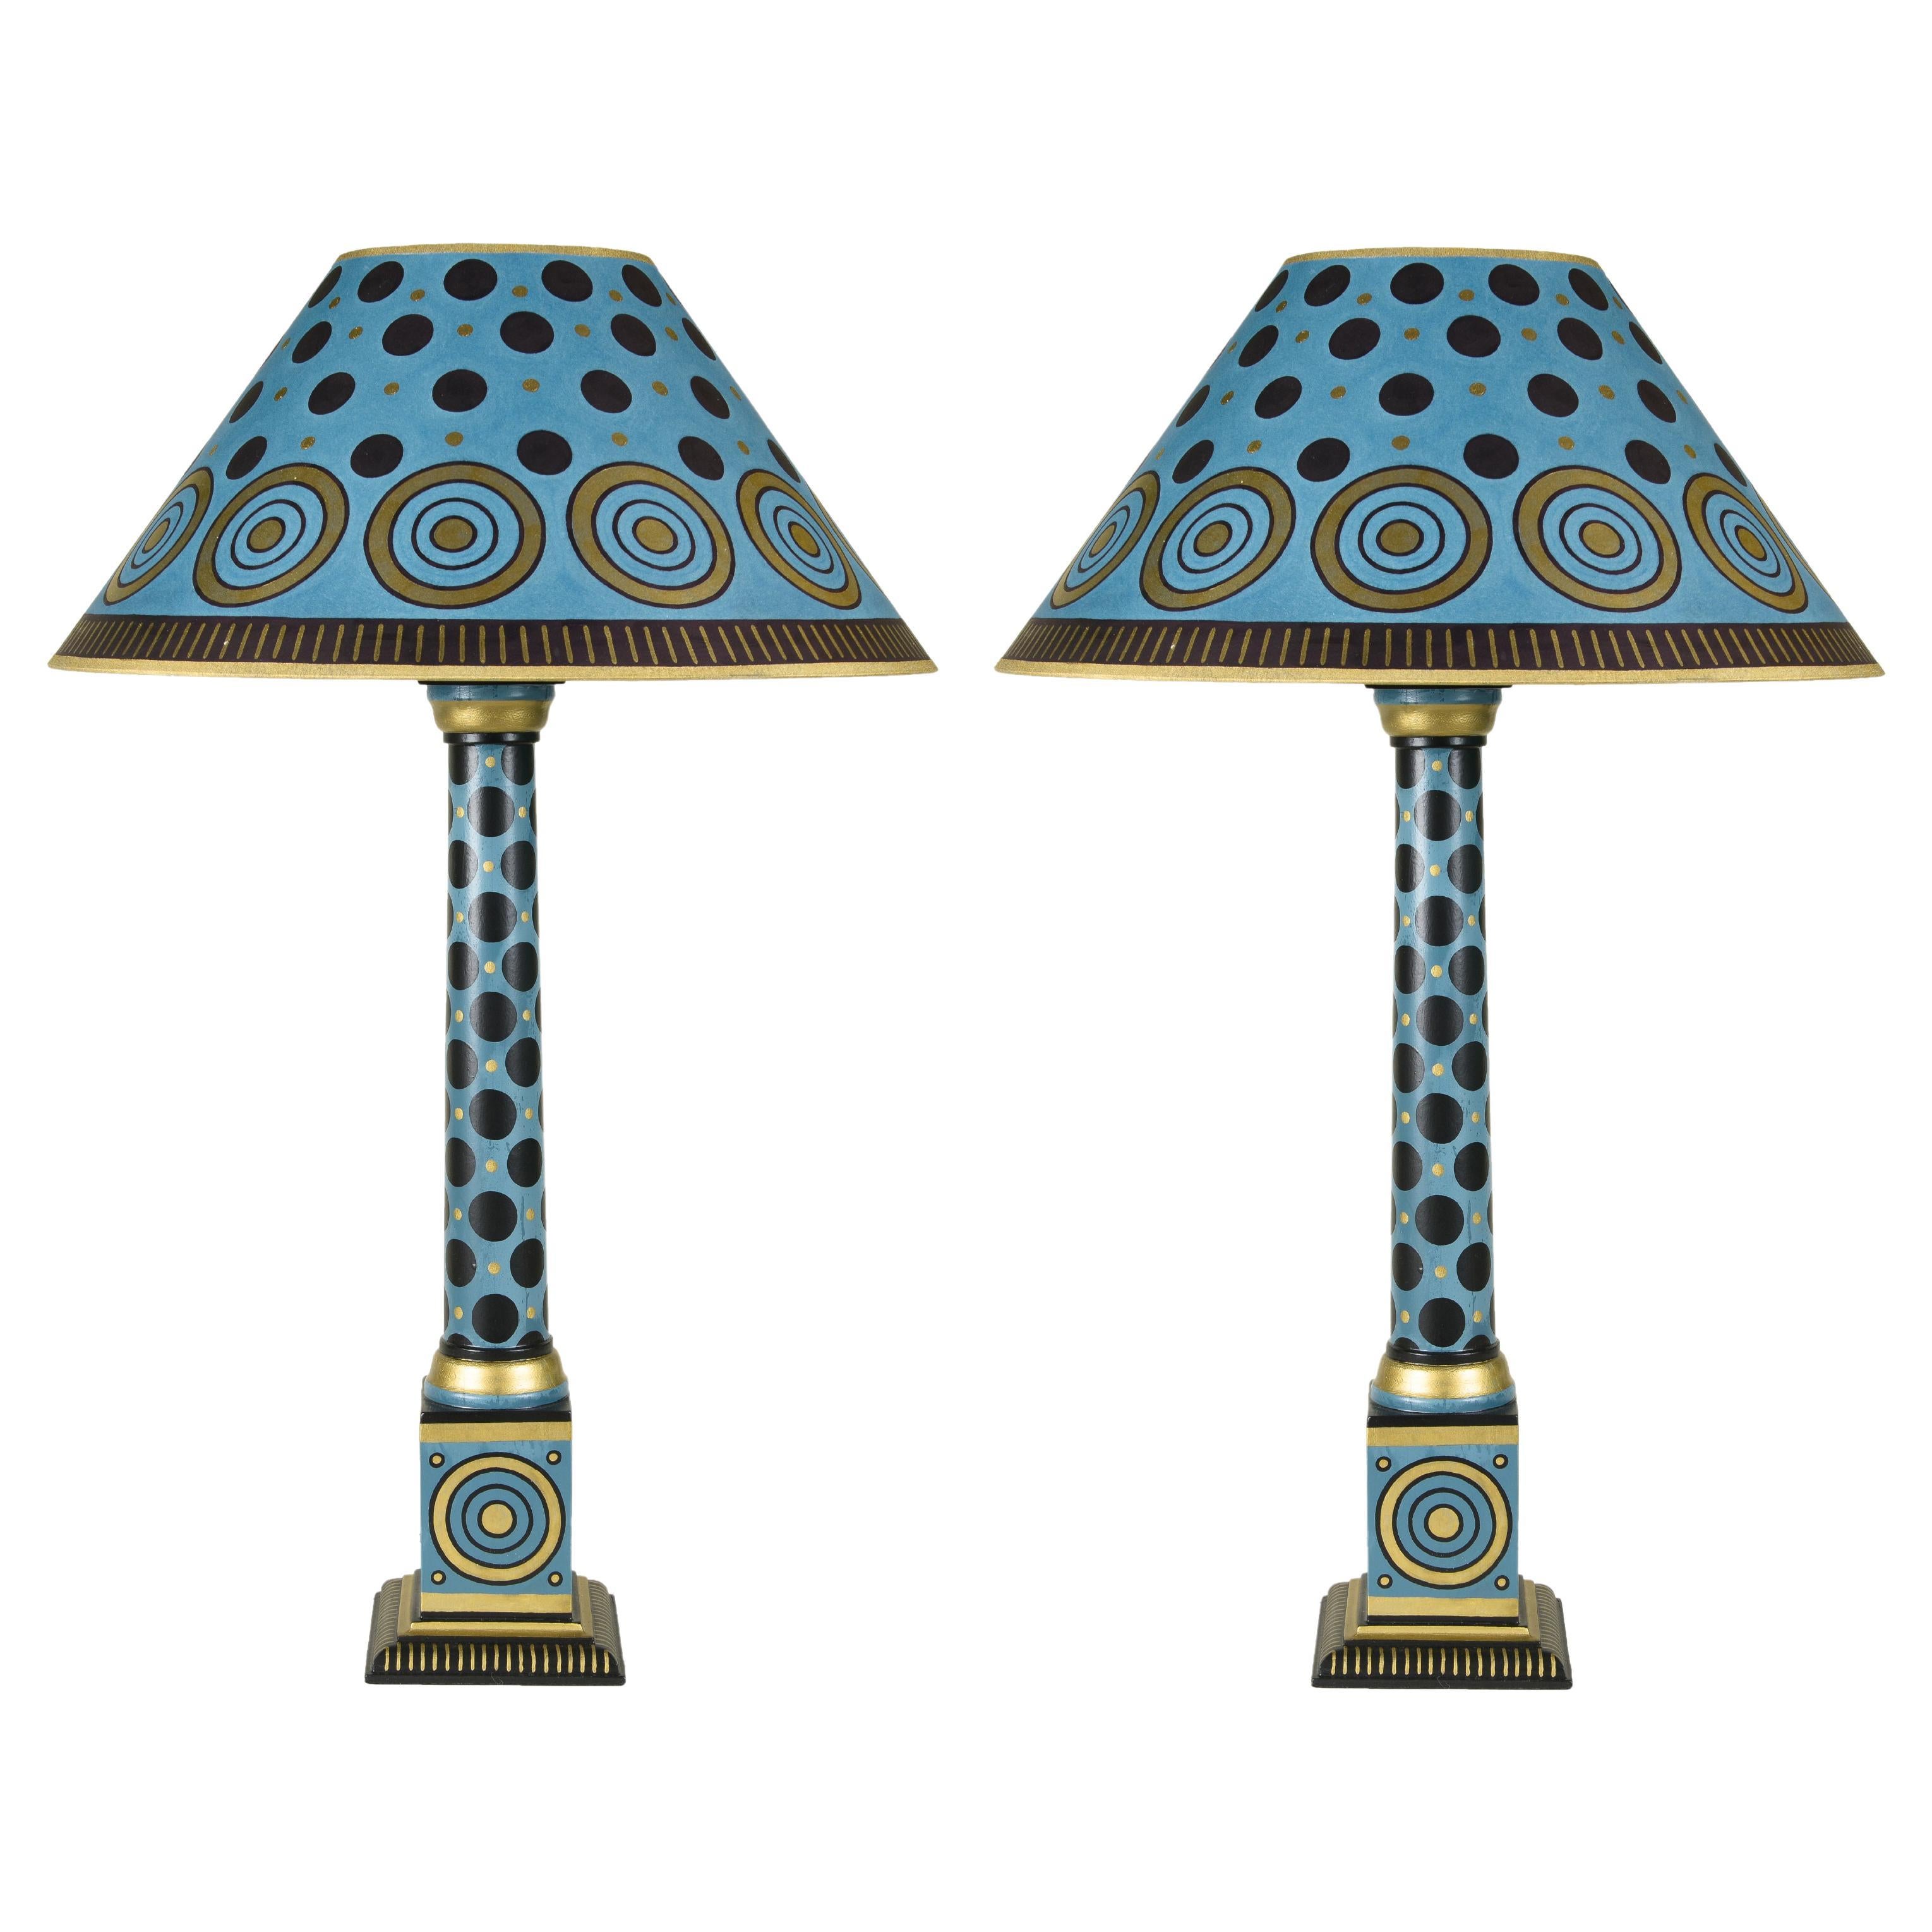 Cressida Bell - 'Trafalgar' Pair of Table Lamps